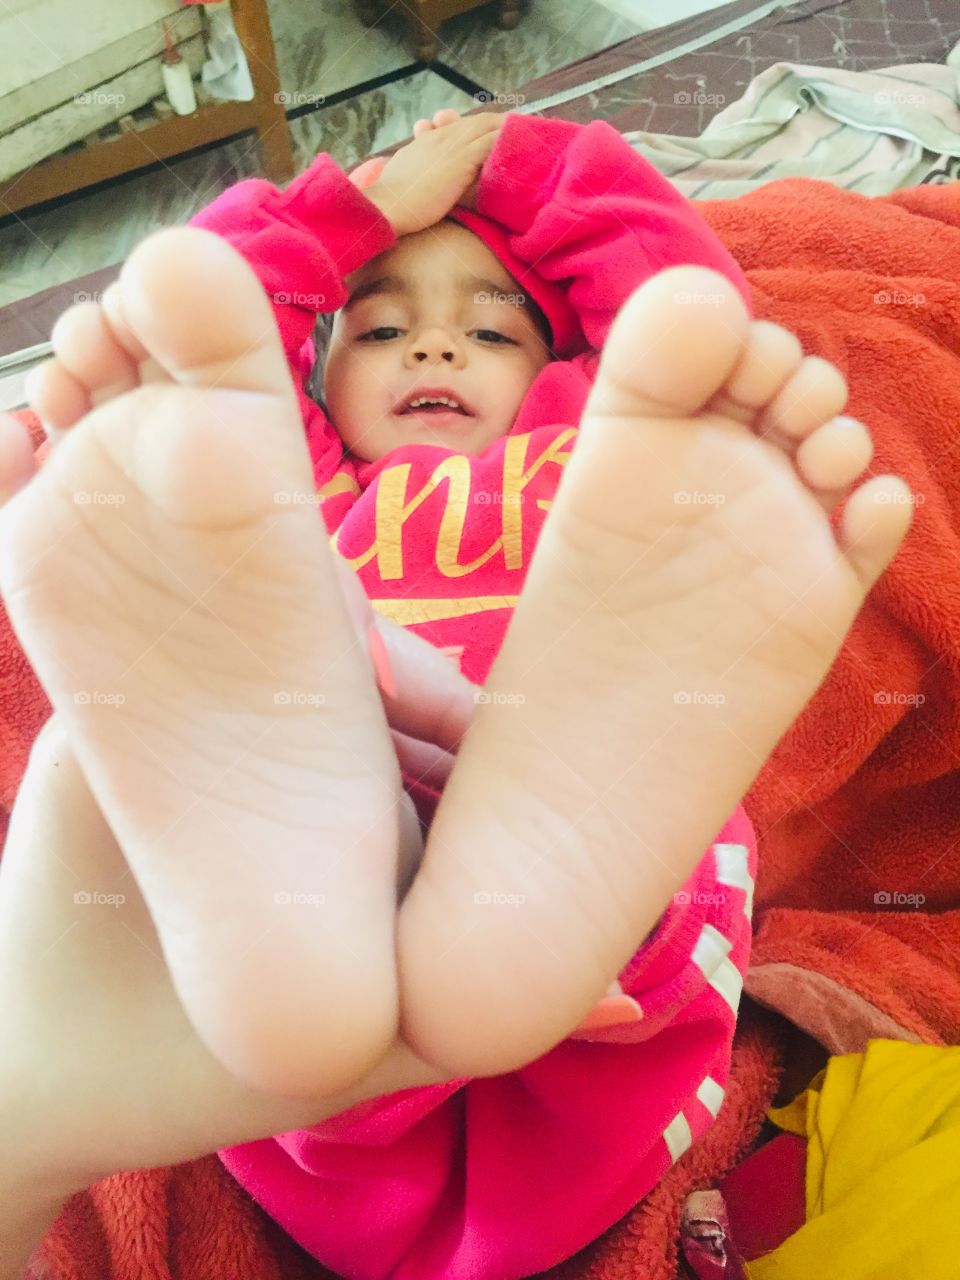 Little angel’s feet